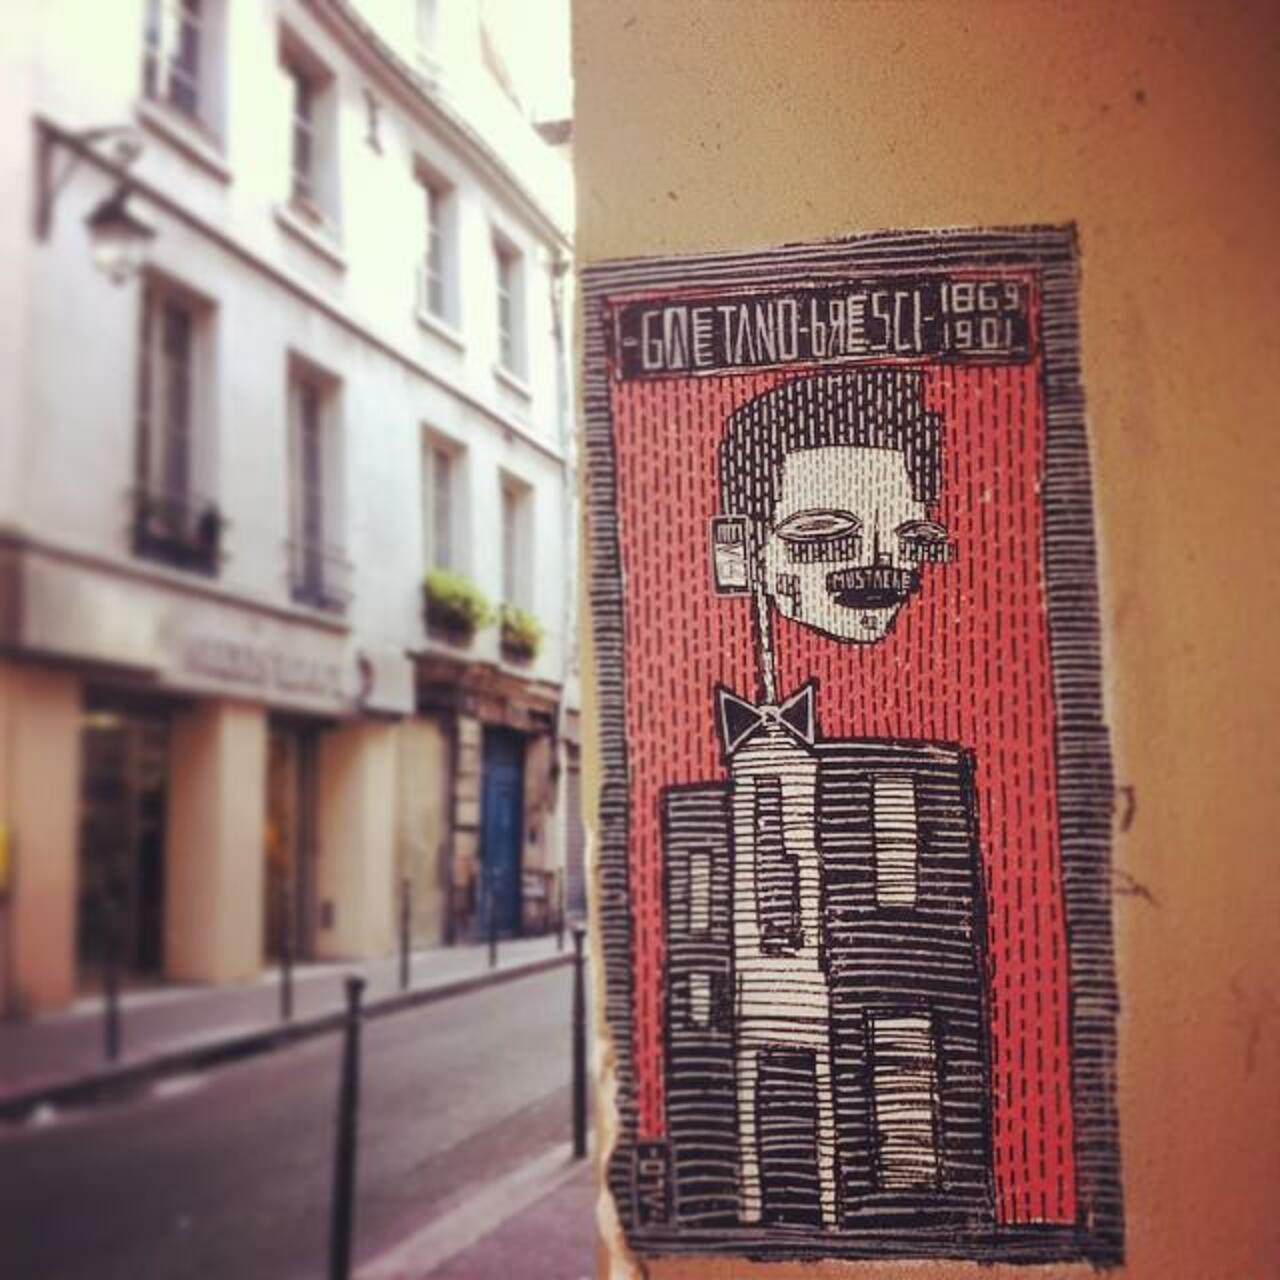 #Paris #graffiti photo by @benstagramin http://ift.tt/1NyfPc8 #StreetArt http://t.co/m9nruNVfar